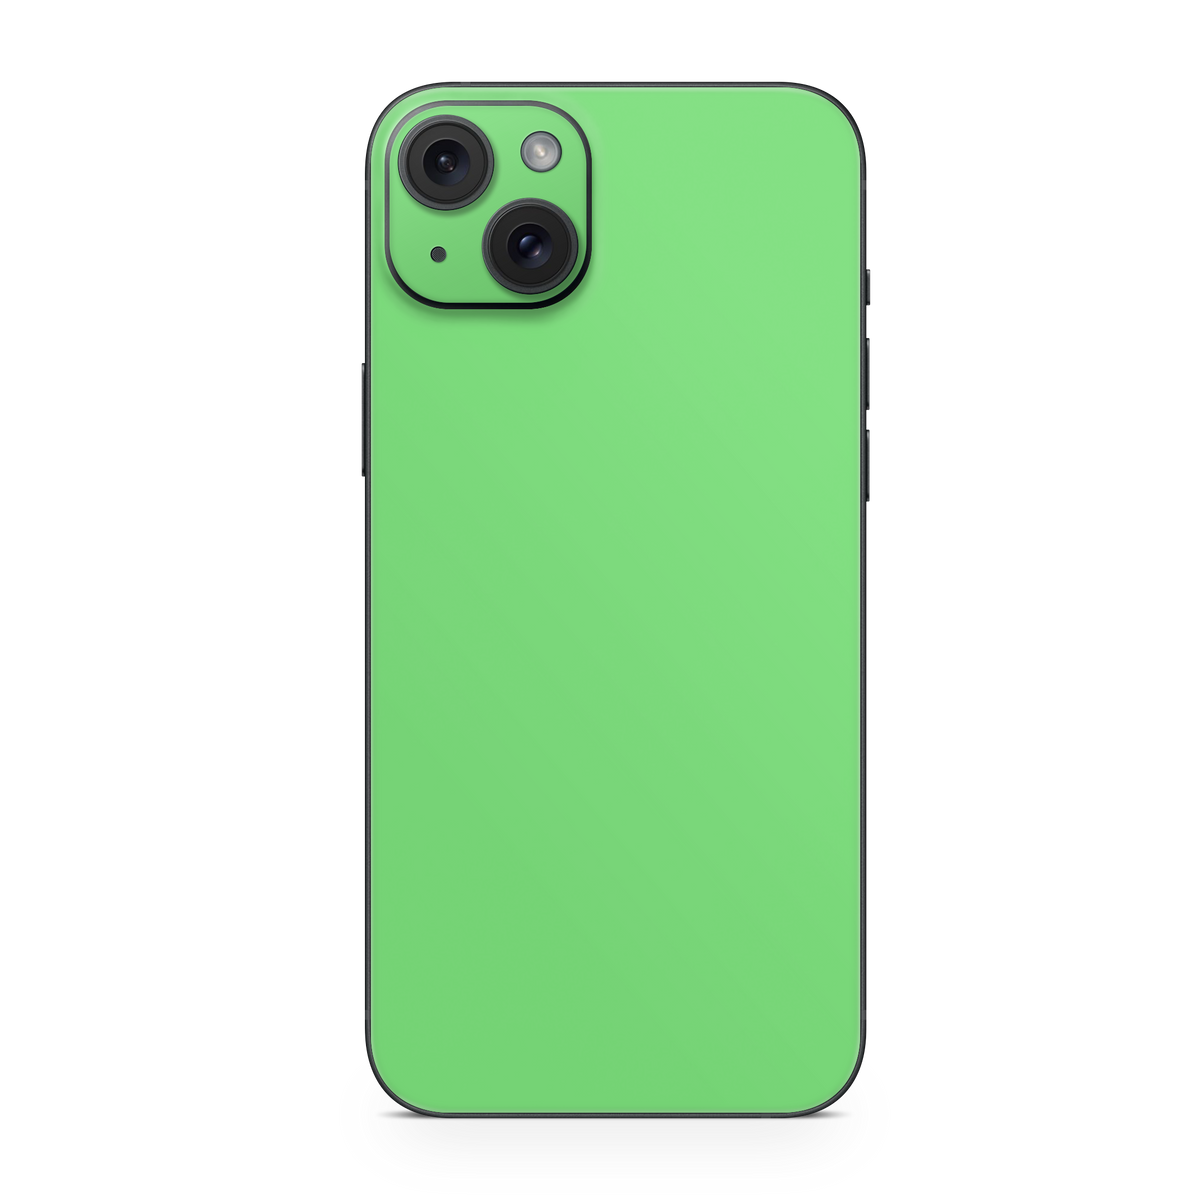 Apple iPhone Pastel Green Skin